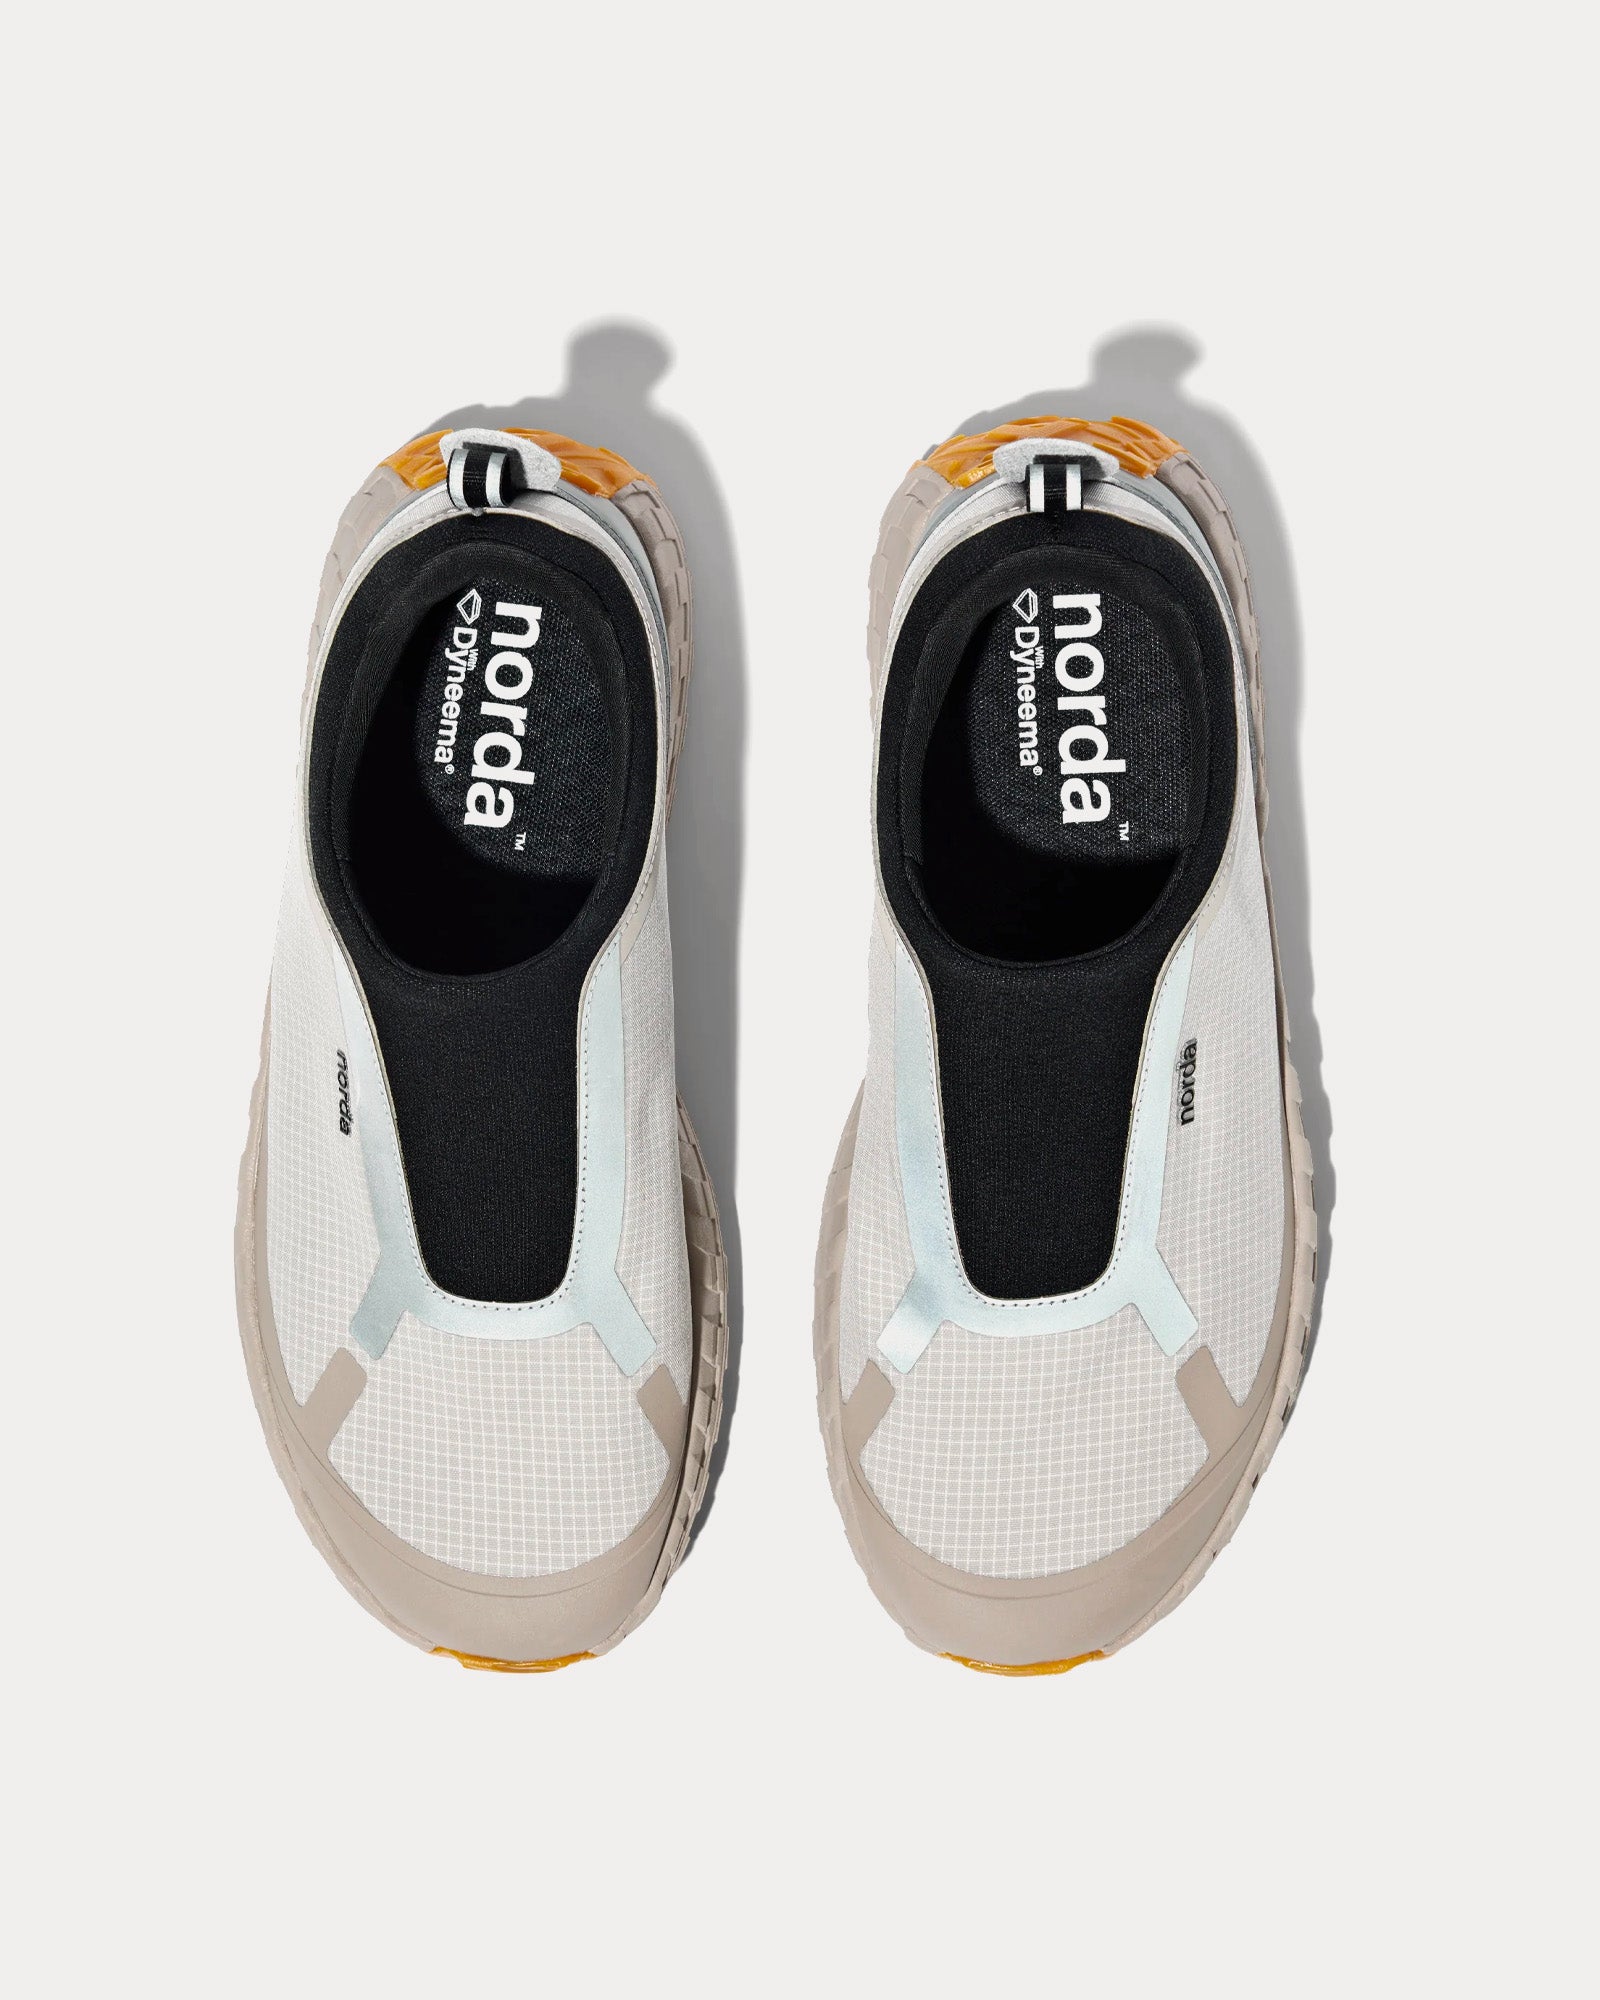 Norda - 003 M Cinder Running Shoes